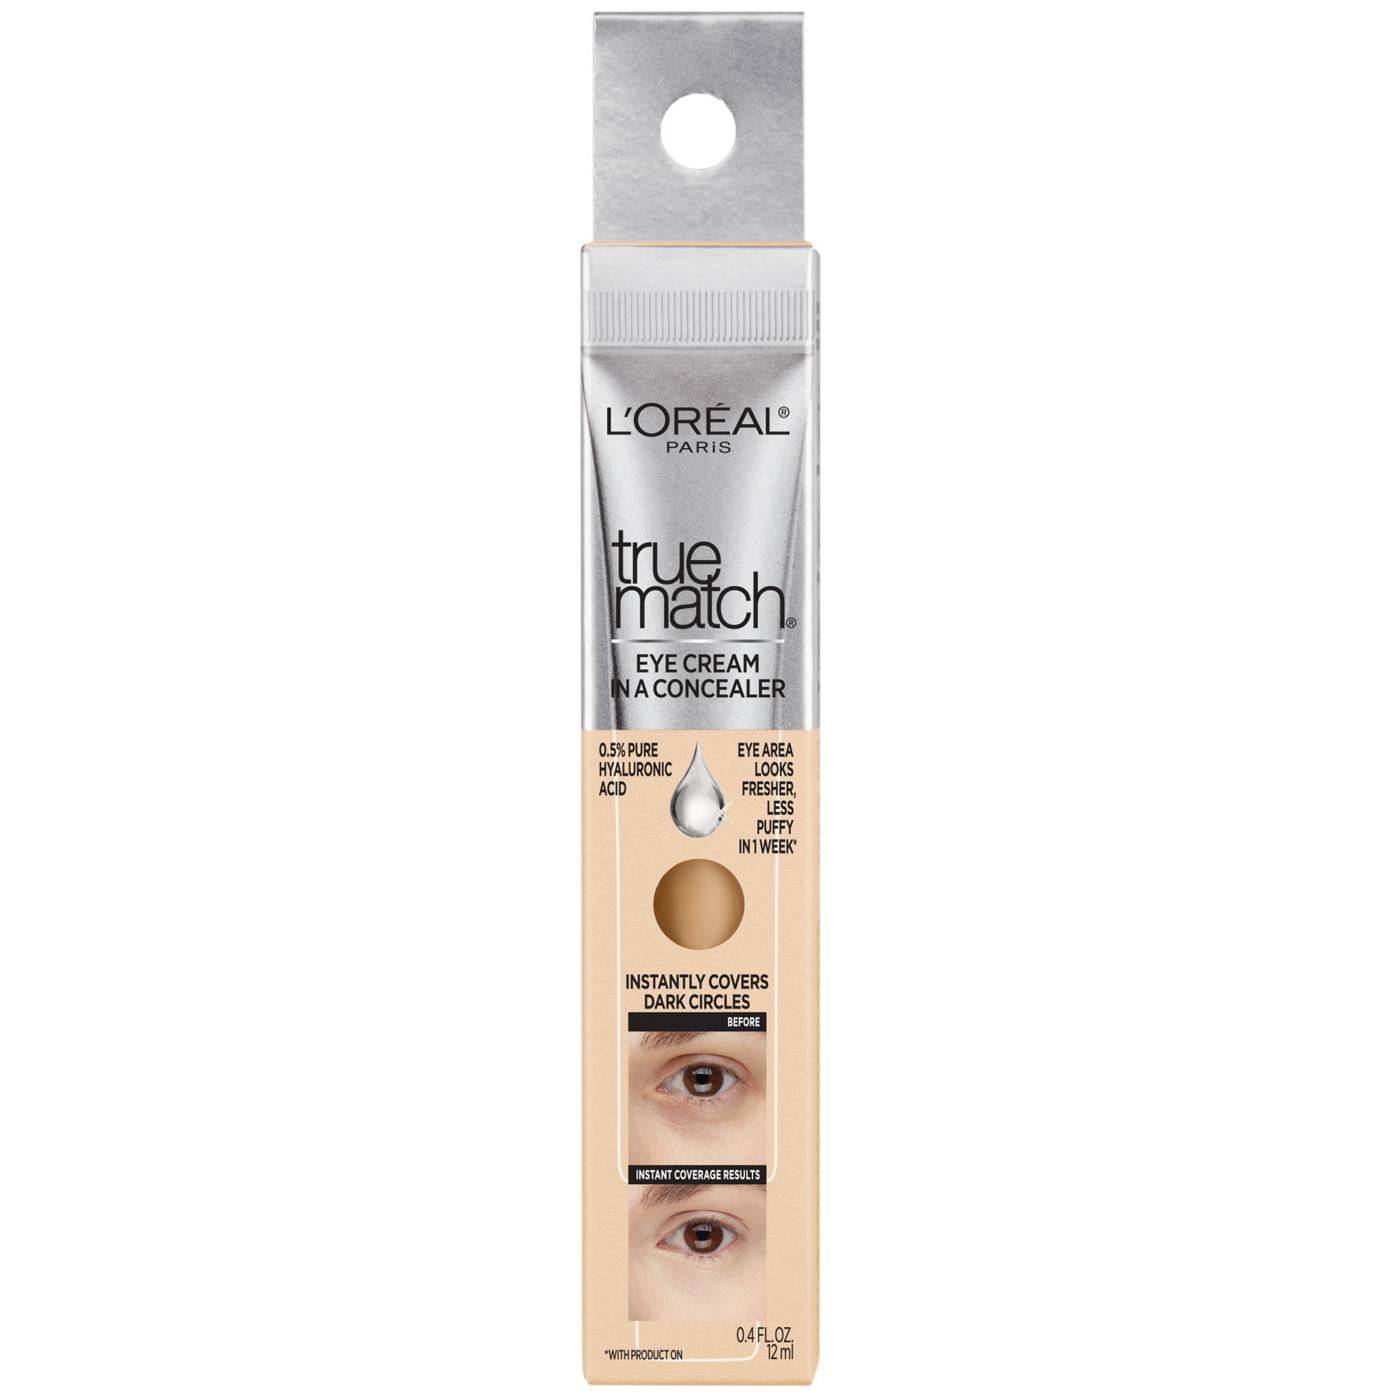 L'Oréal Paris True Match Eye Cream in a Concealer 0.5 percent hyaluronic acid Fair W1-2; image 1 of 7